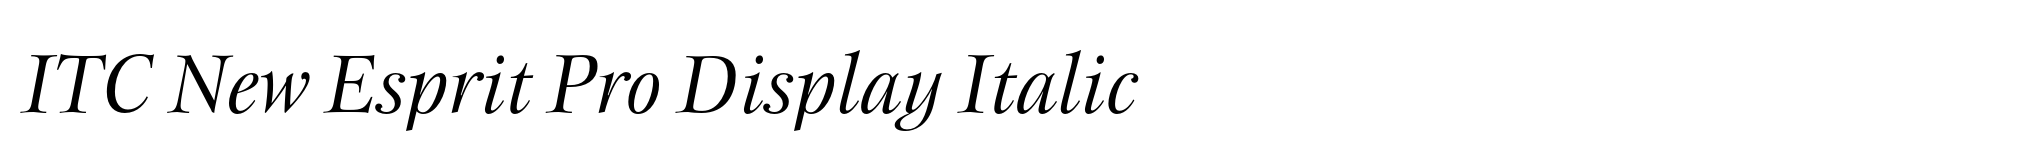 ITC New Esprit Pro Display Italic image